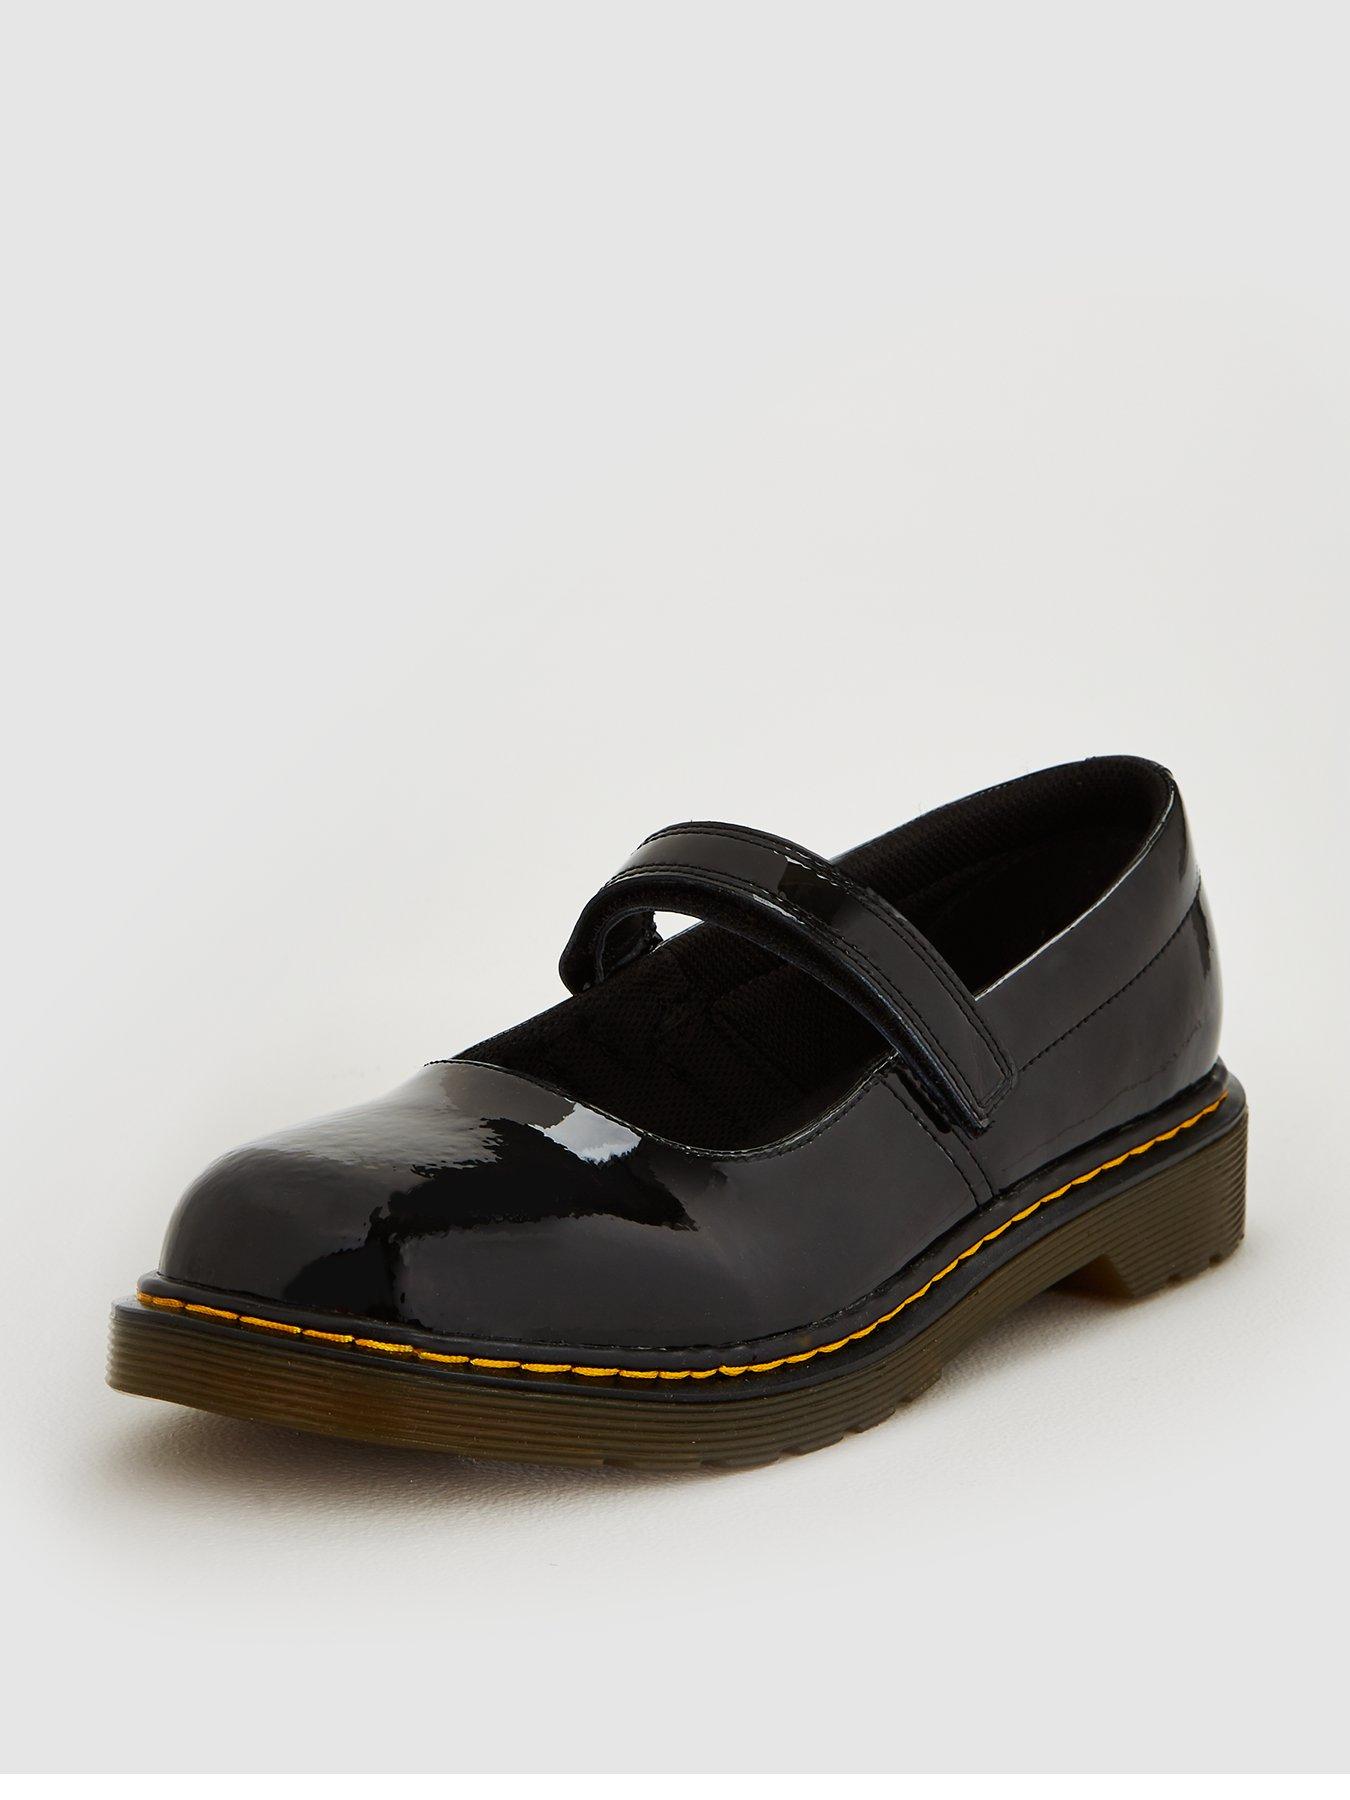 black mary jane shoes